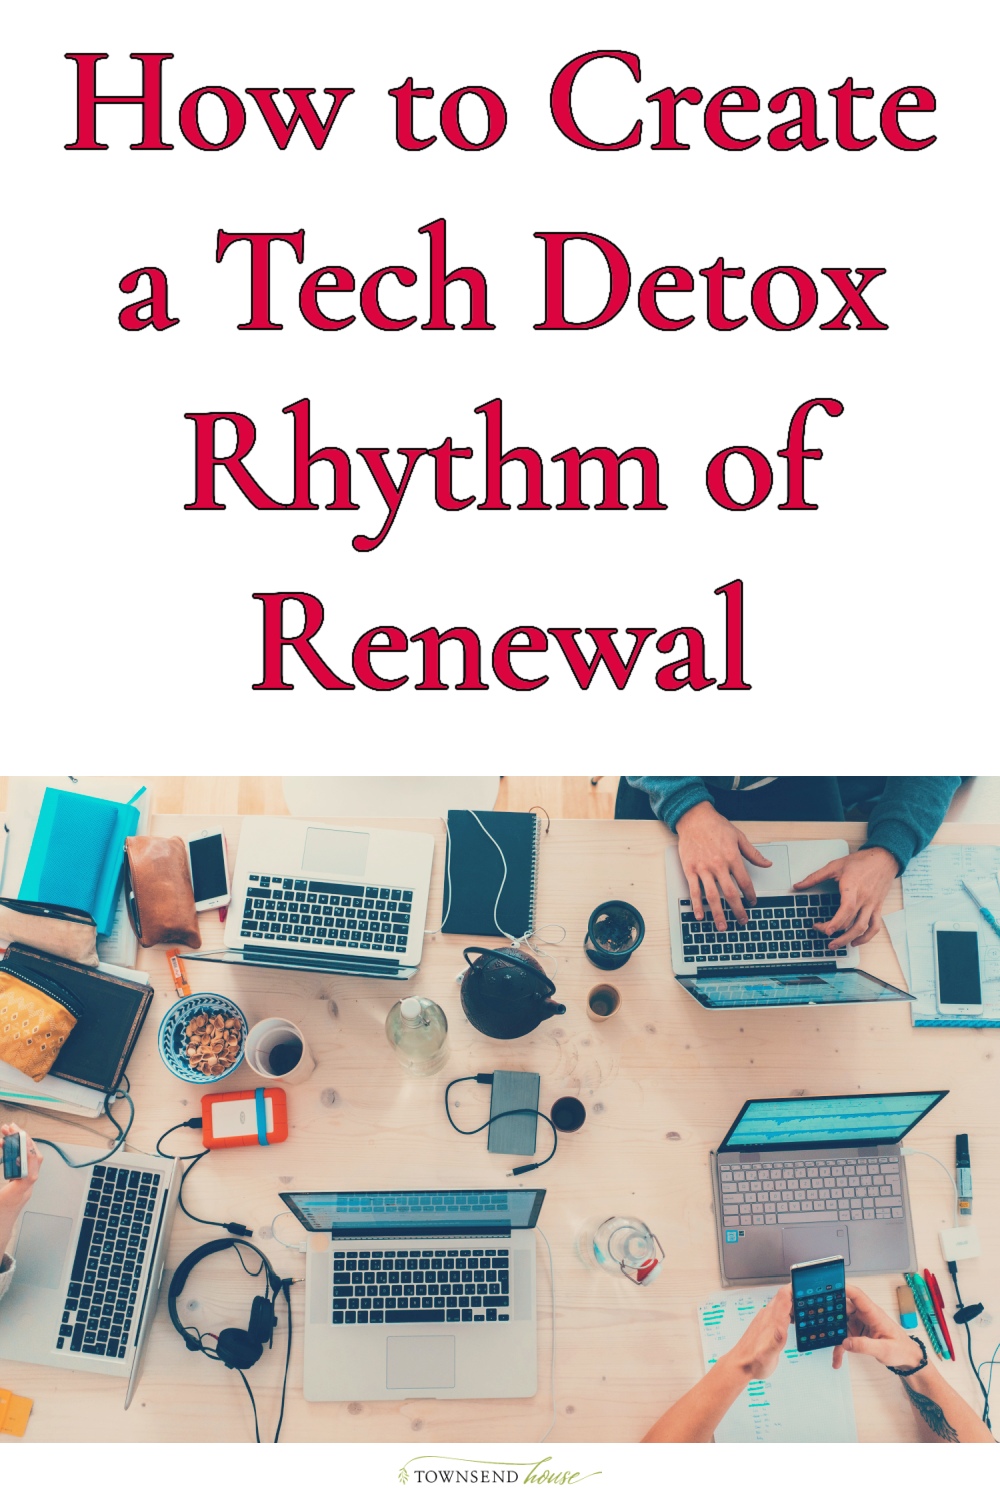 How to Create a Tech Detox Rhythm of Renewal